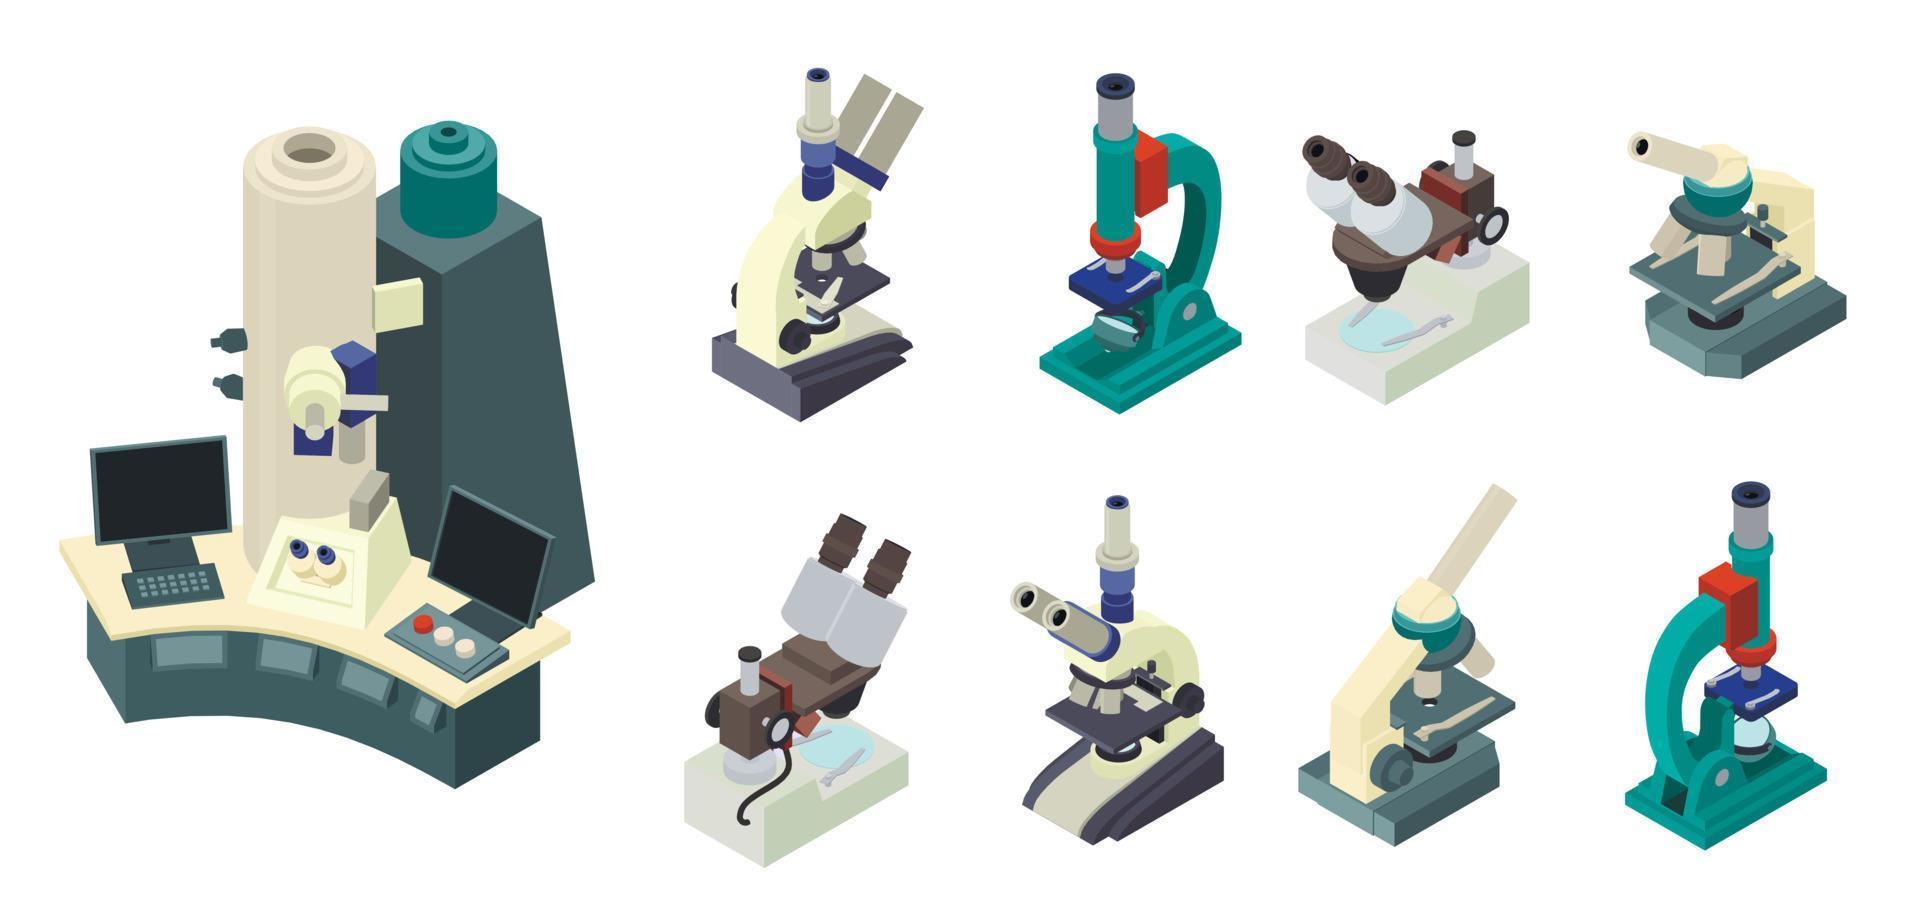 Microscope icons set, isometric style vector